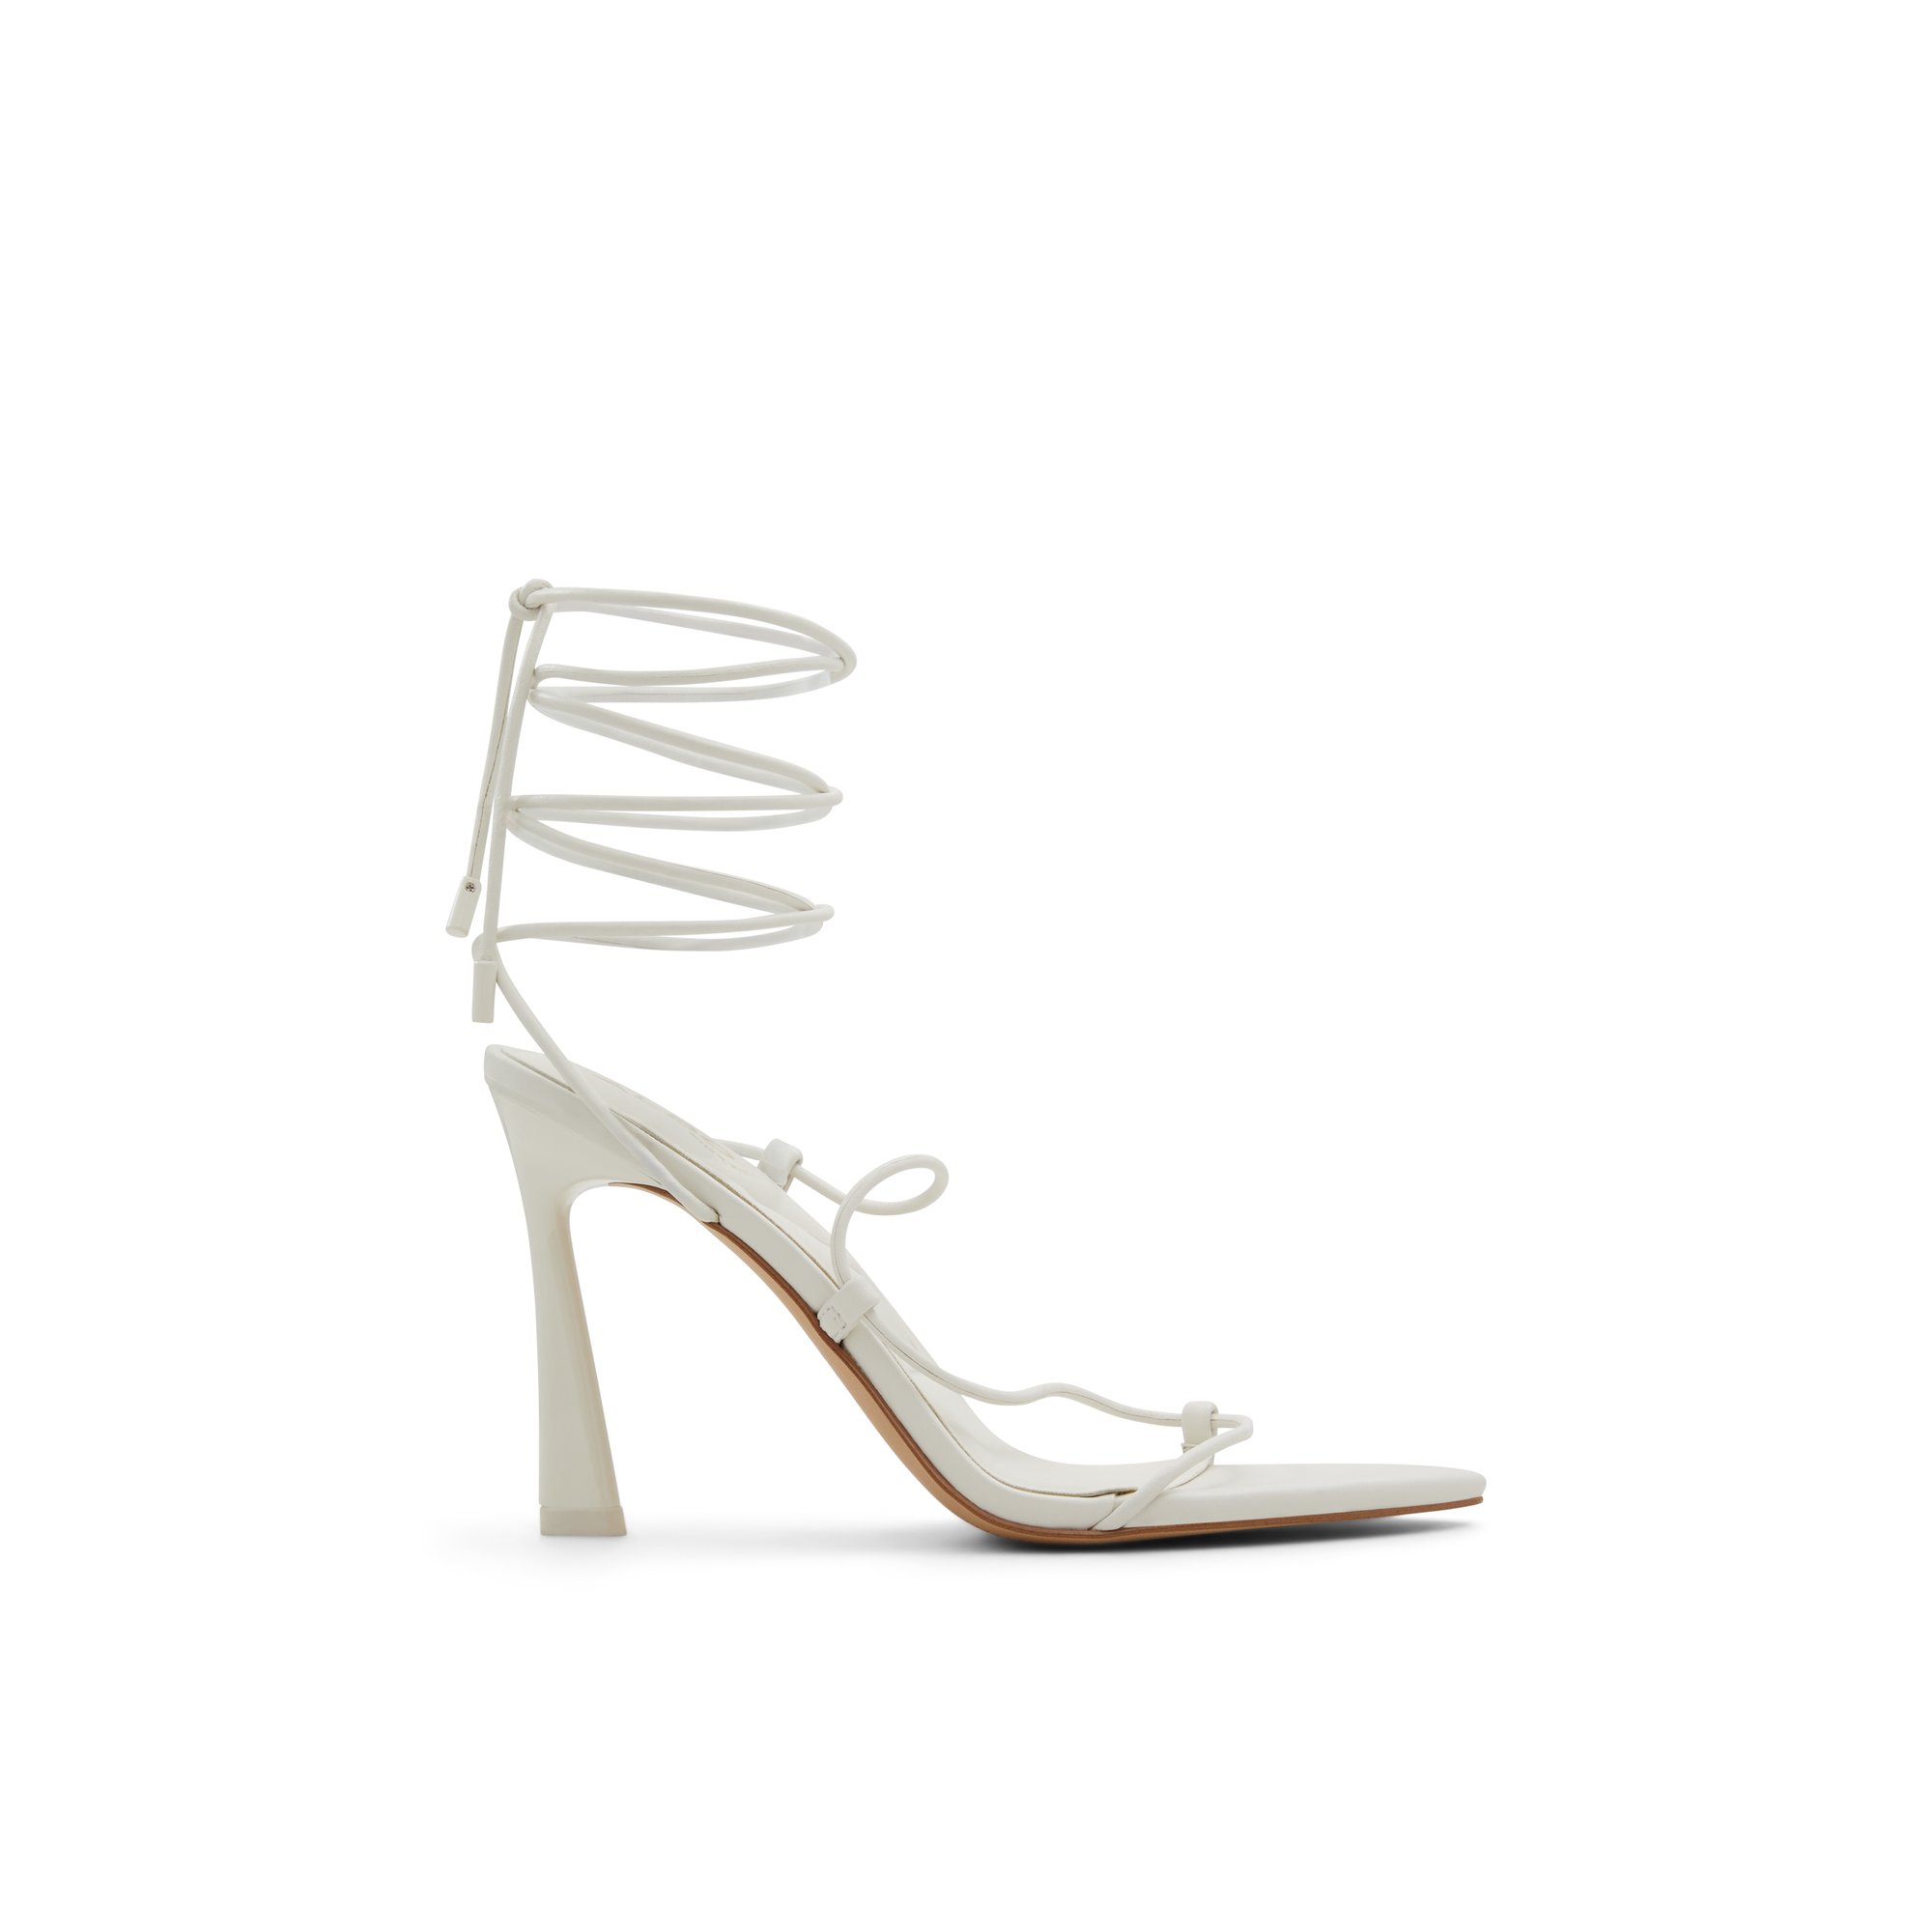 ALDO Melodic - Women's Sandals Heeled - White